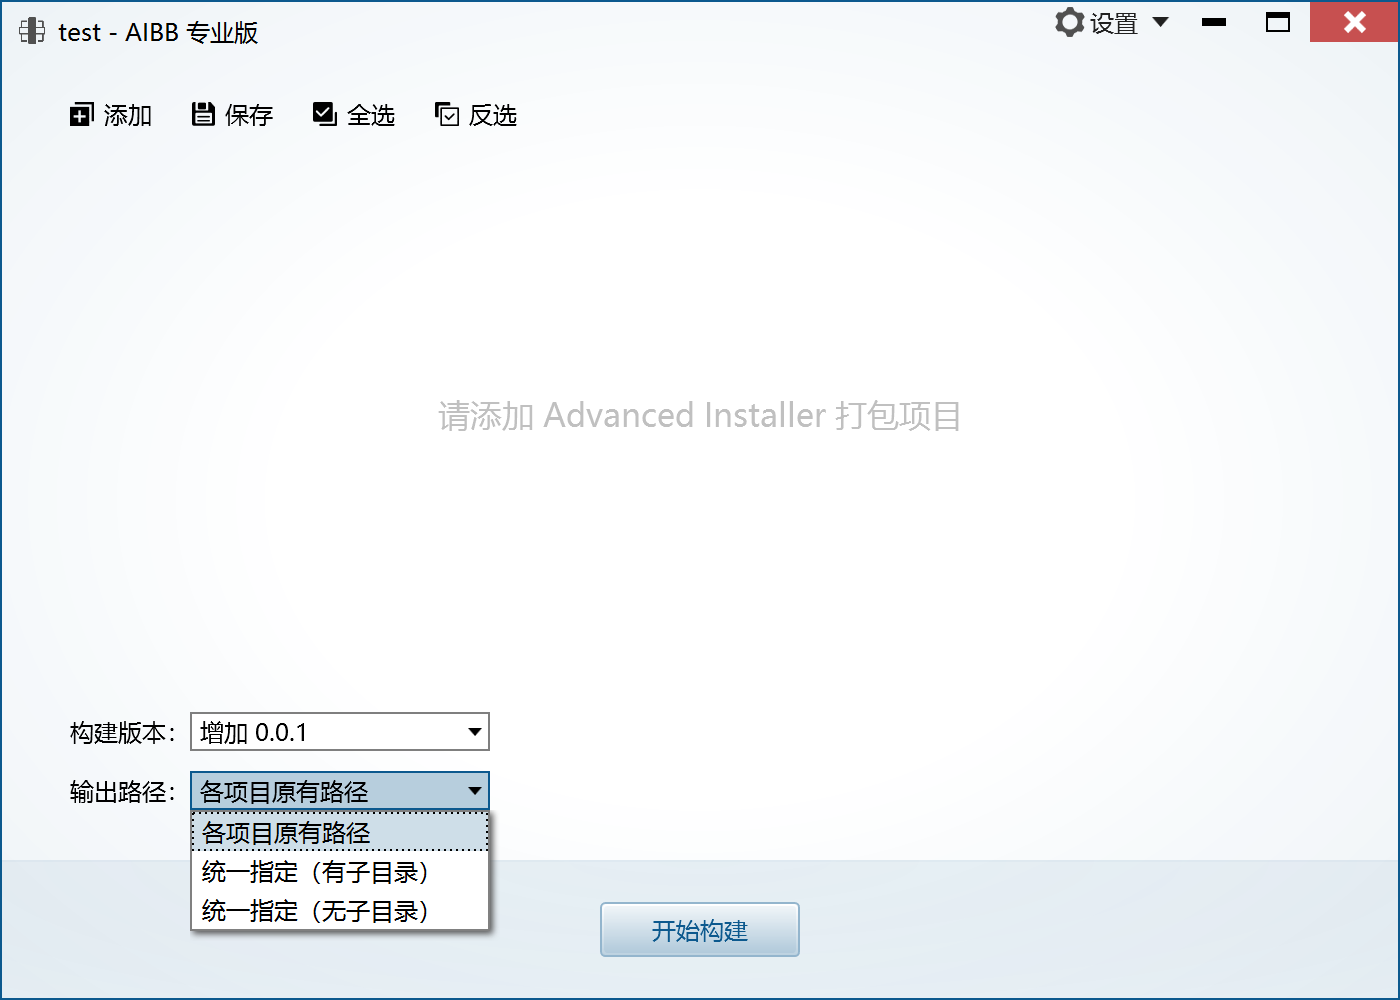 AIBB -Advanced Installer批量打包构建